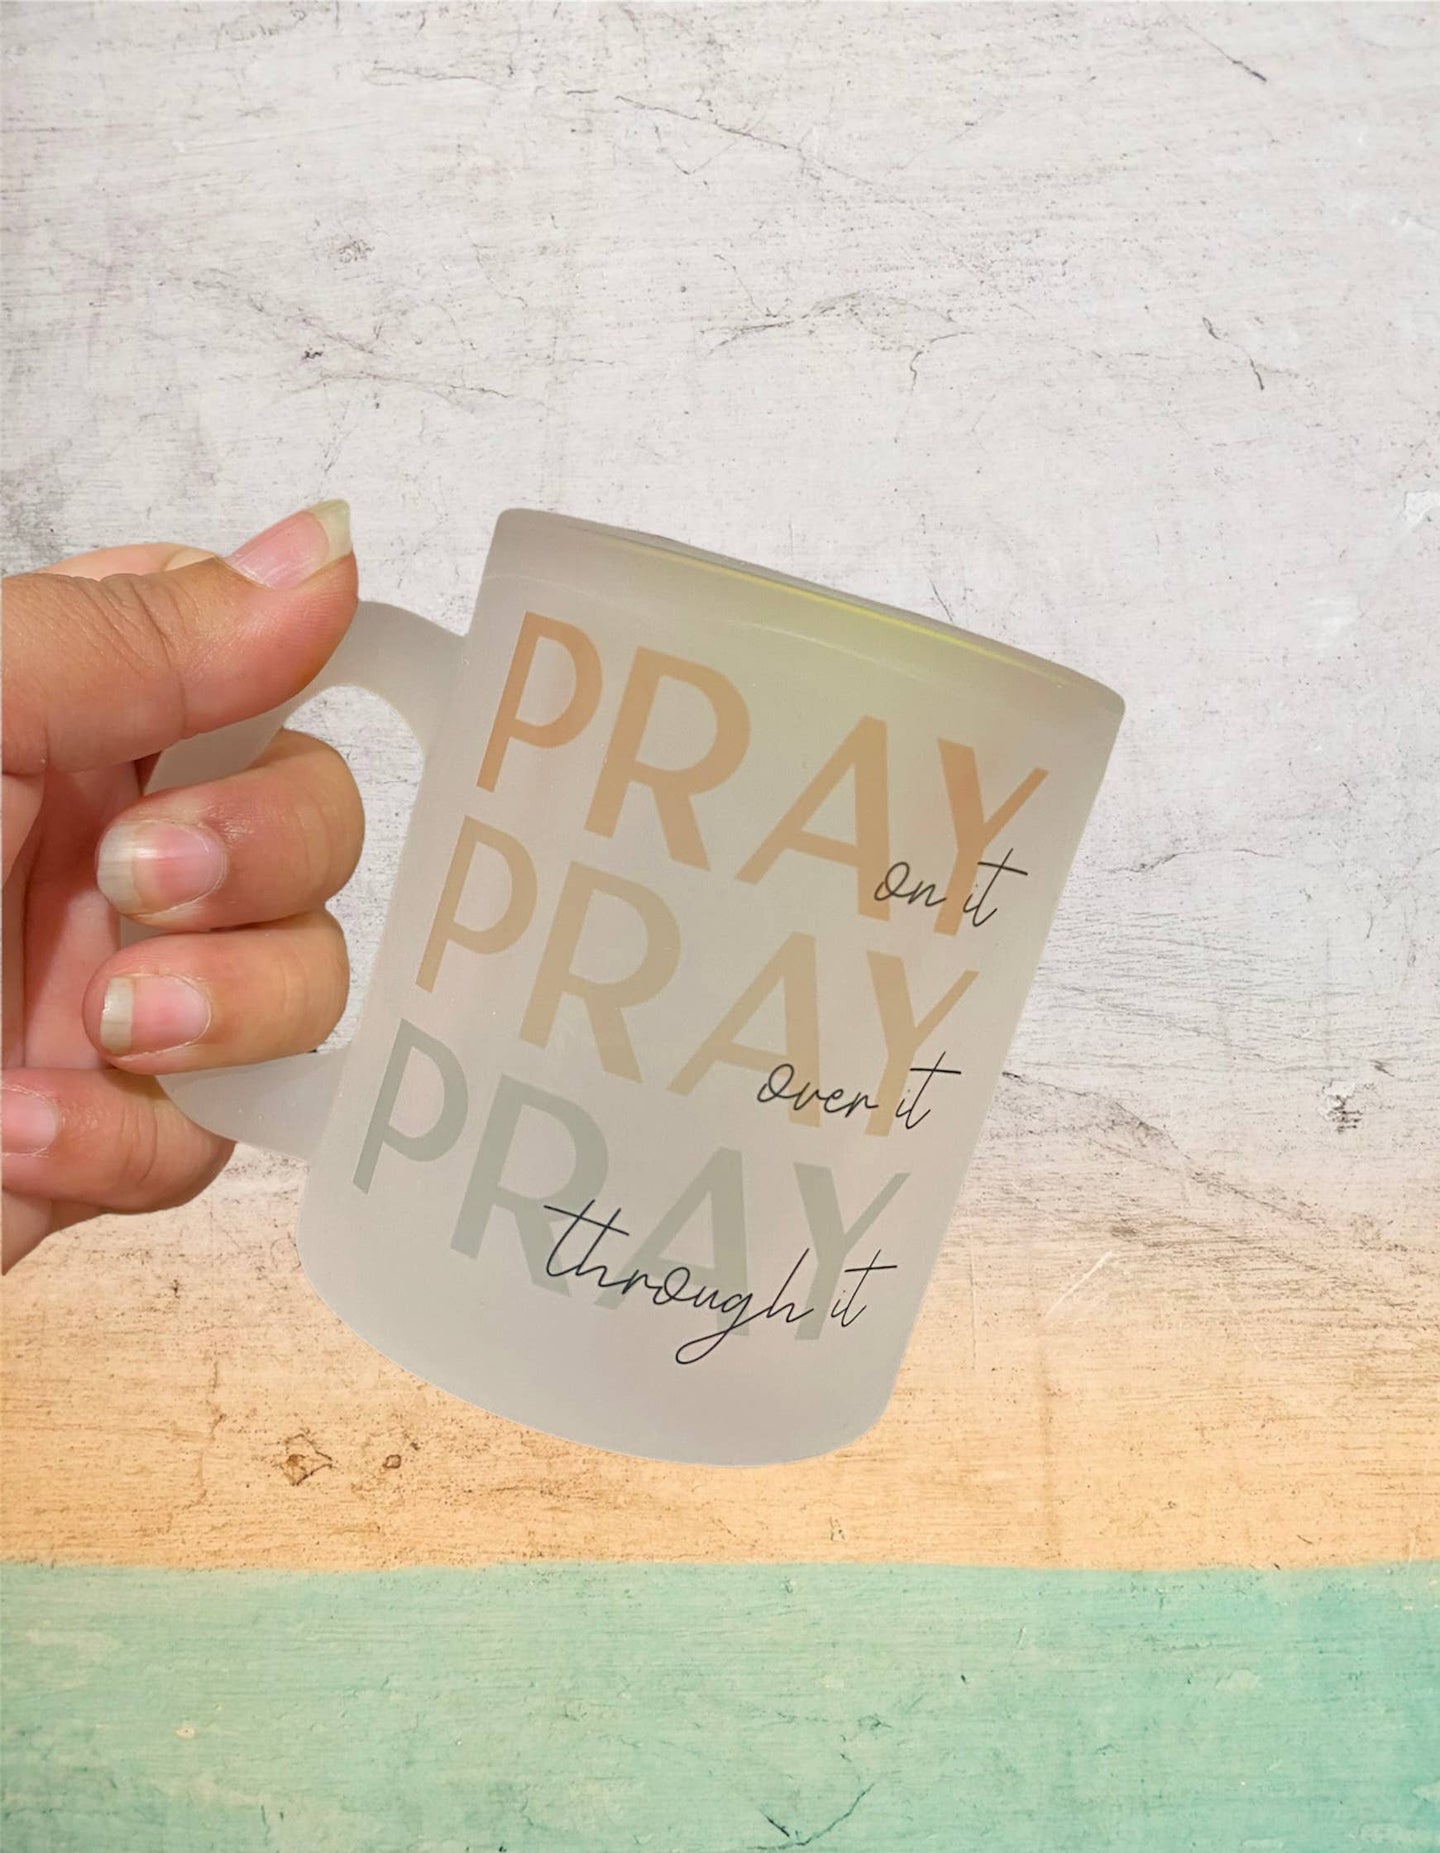 Pray on it, Pray over it, Pray through it - Frosted Mug